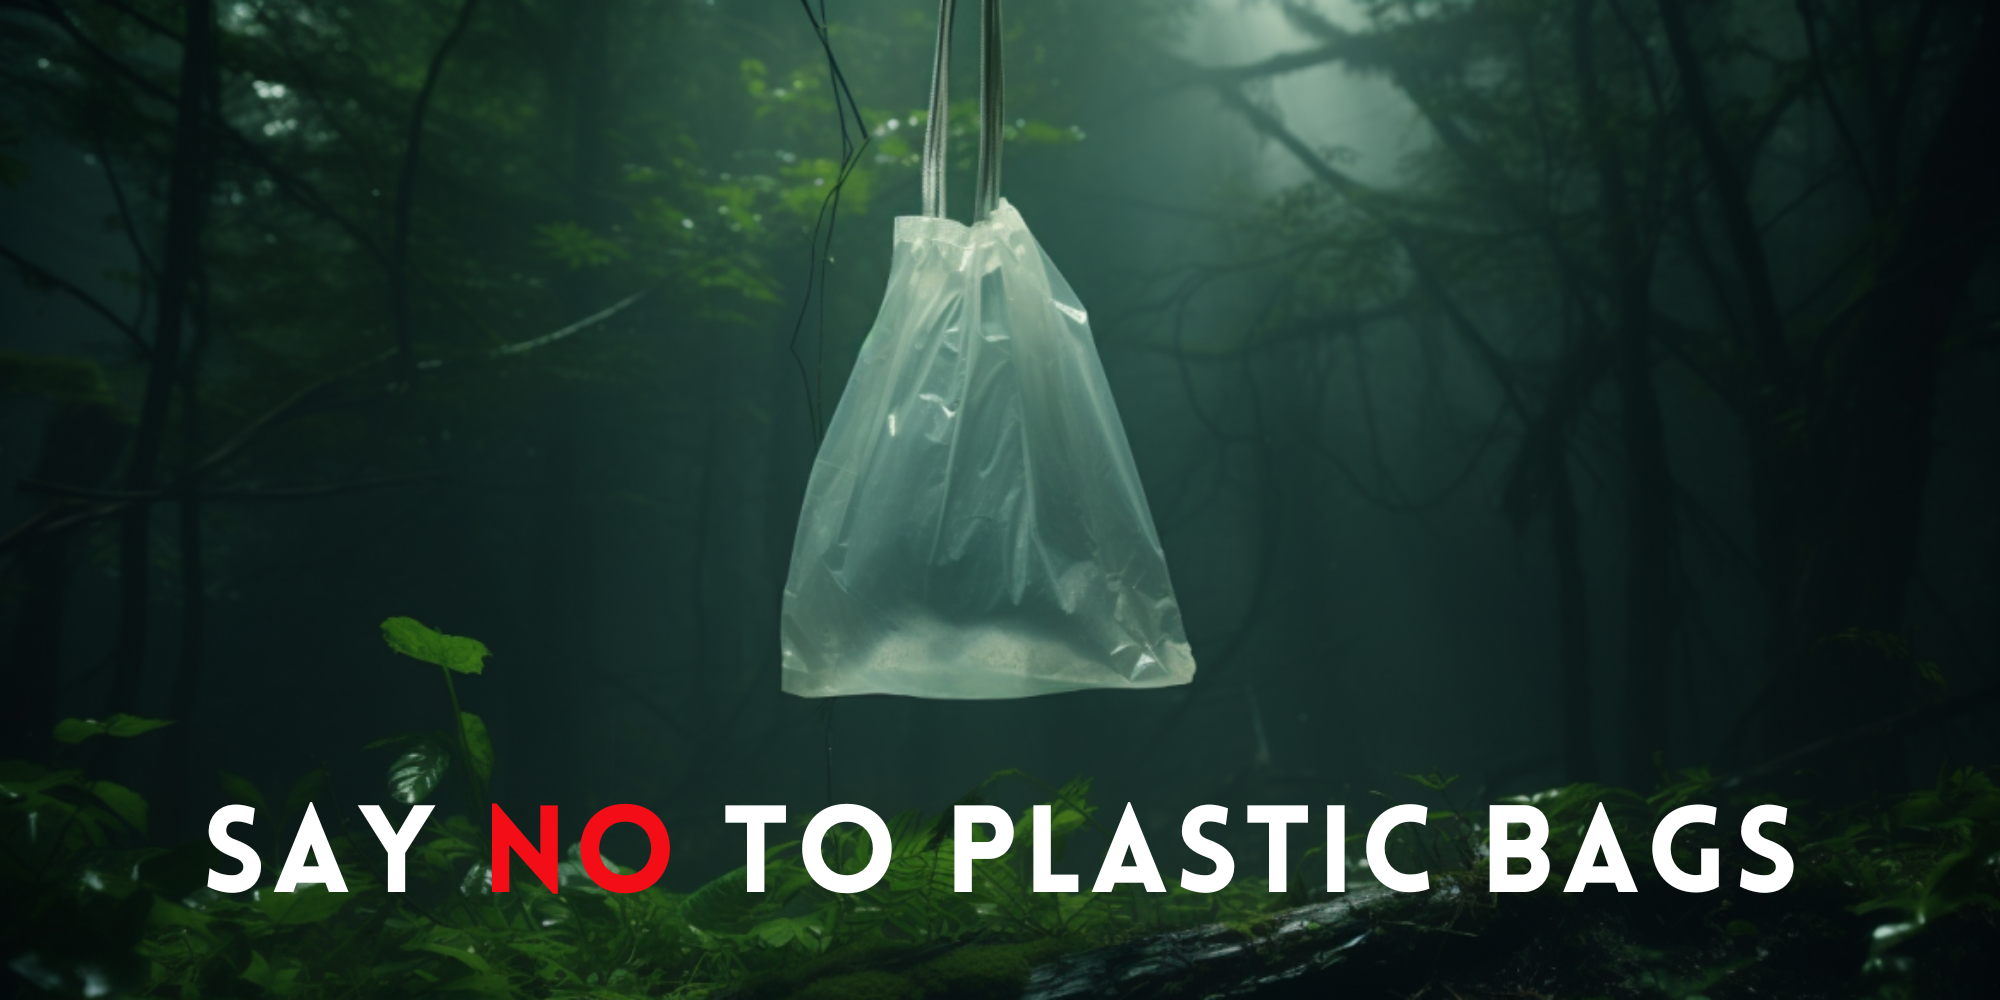 Creating Awareness and Change: International Plastic Bag Free Day